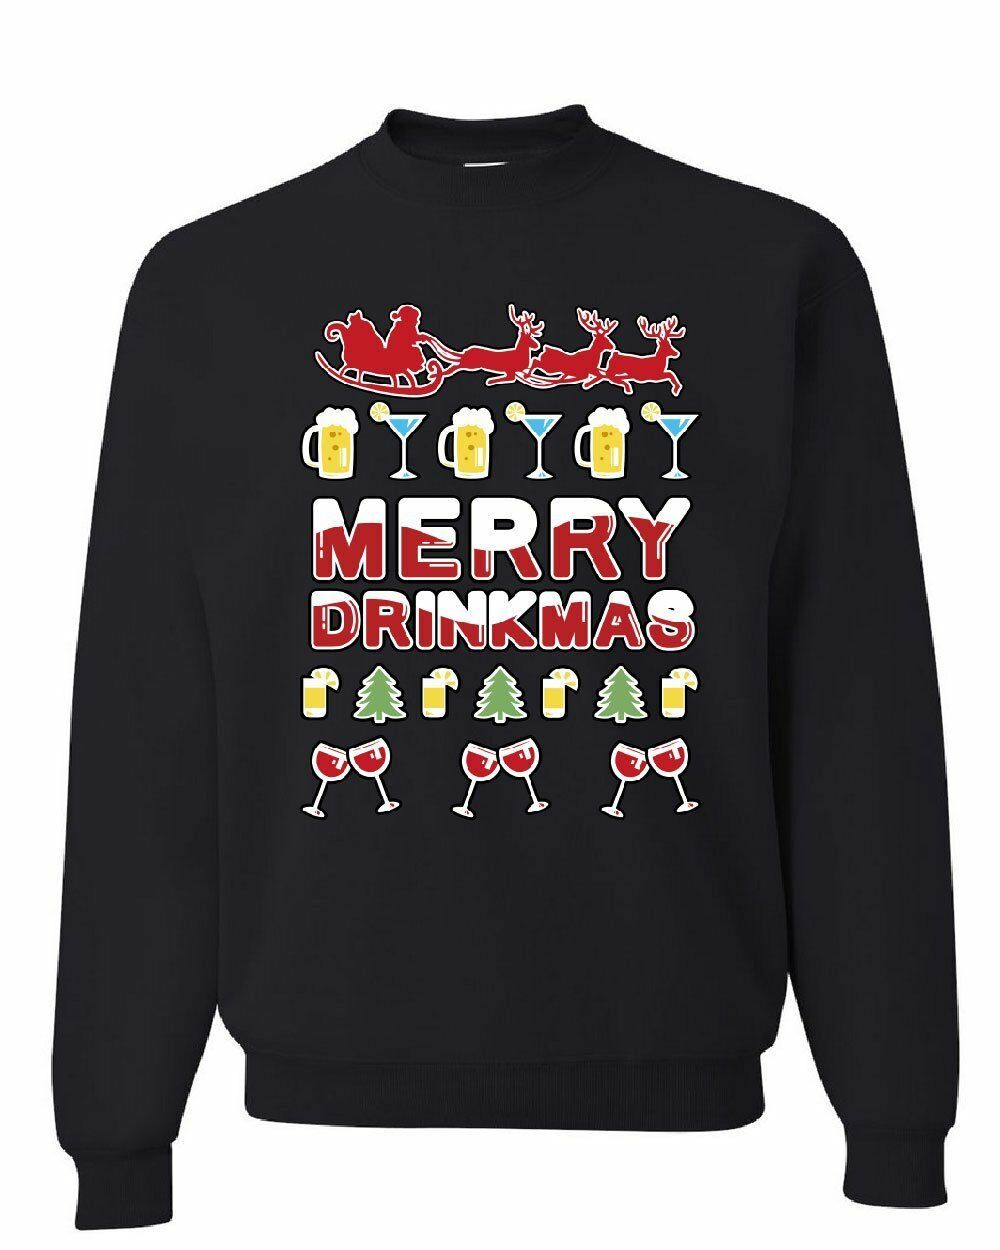 Merry Drinkmas Sweatshirt  Santa Drinking Party Beer Christmas Sweatshirt Style: Sweatshirt, Color: Black